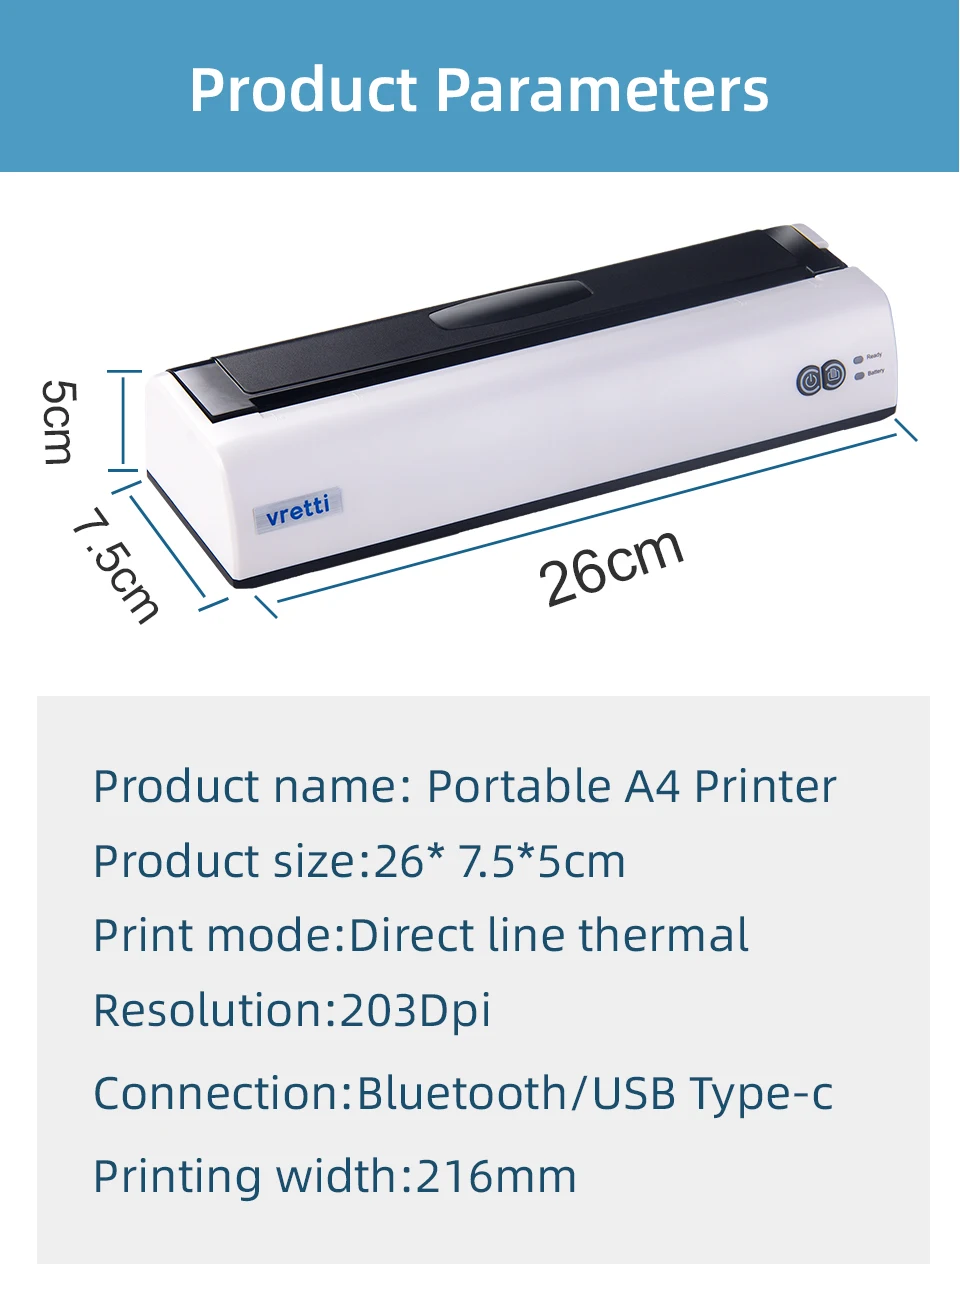 Vretti A4 printer Thermal Receipt Printer Bluetooth USB Port Home Office Small Portable POS Long Lasting Life Thermal Printer pocket mini printer for student